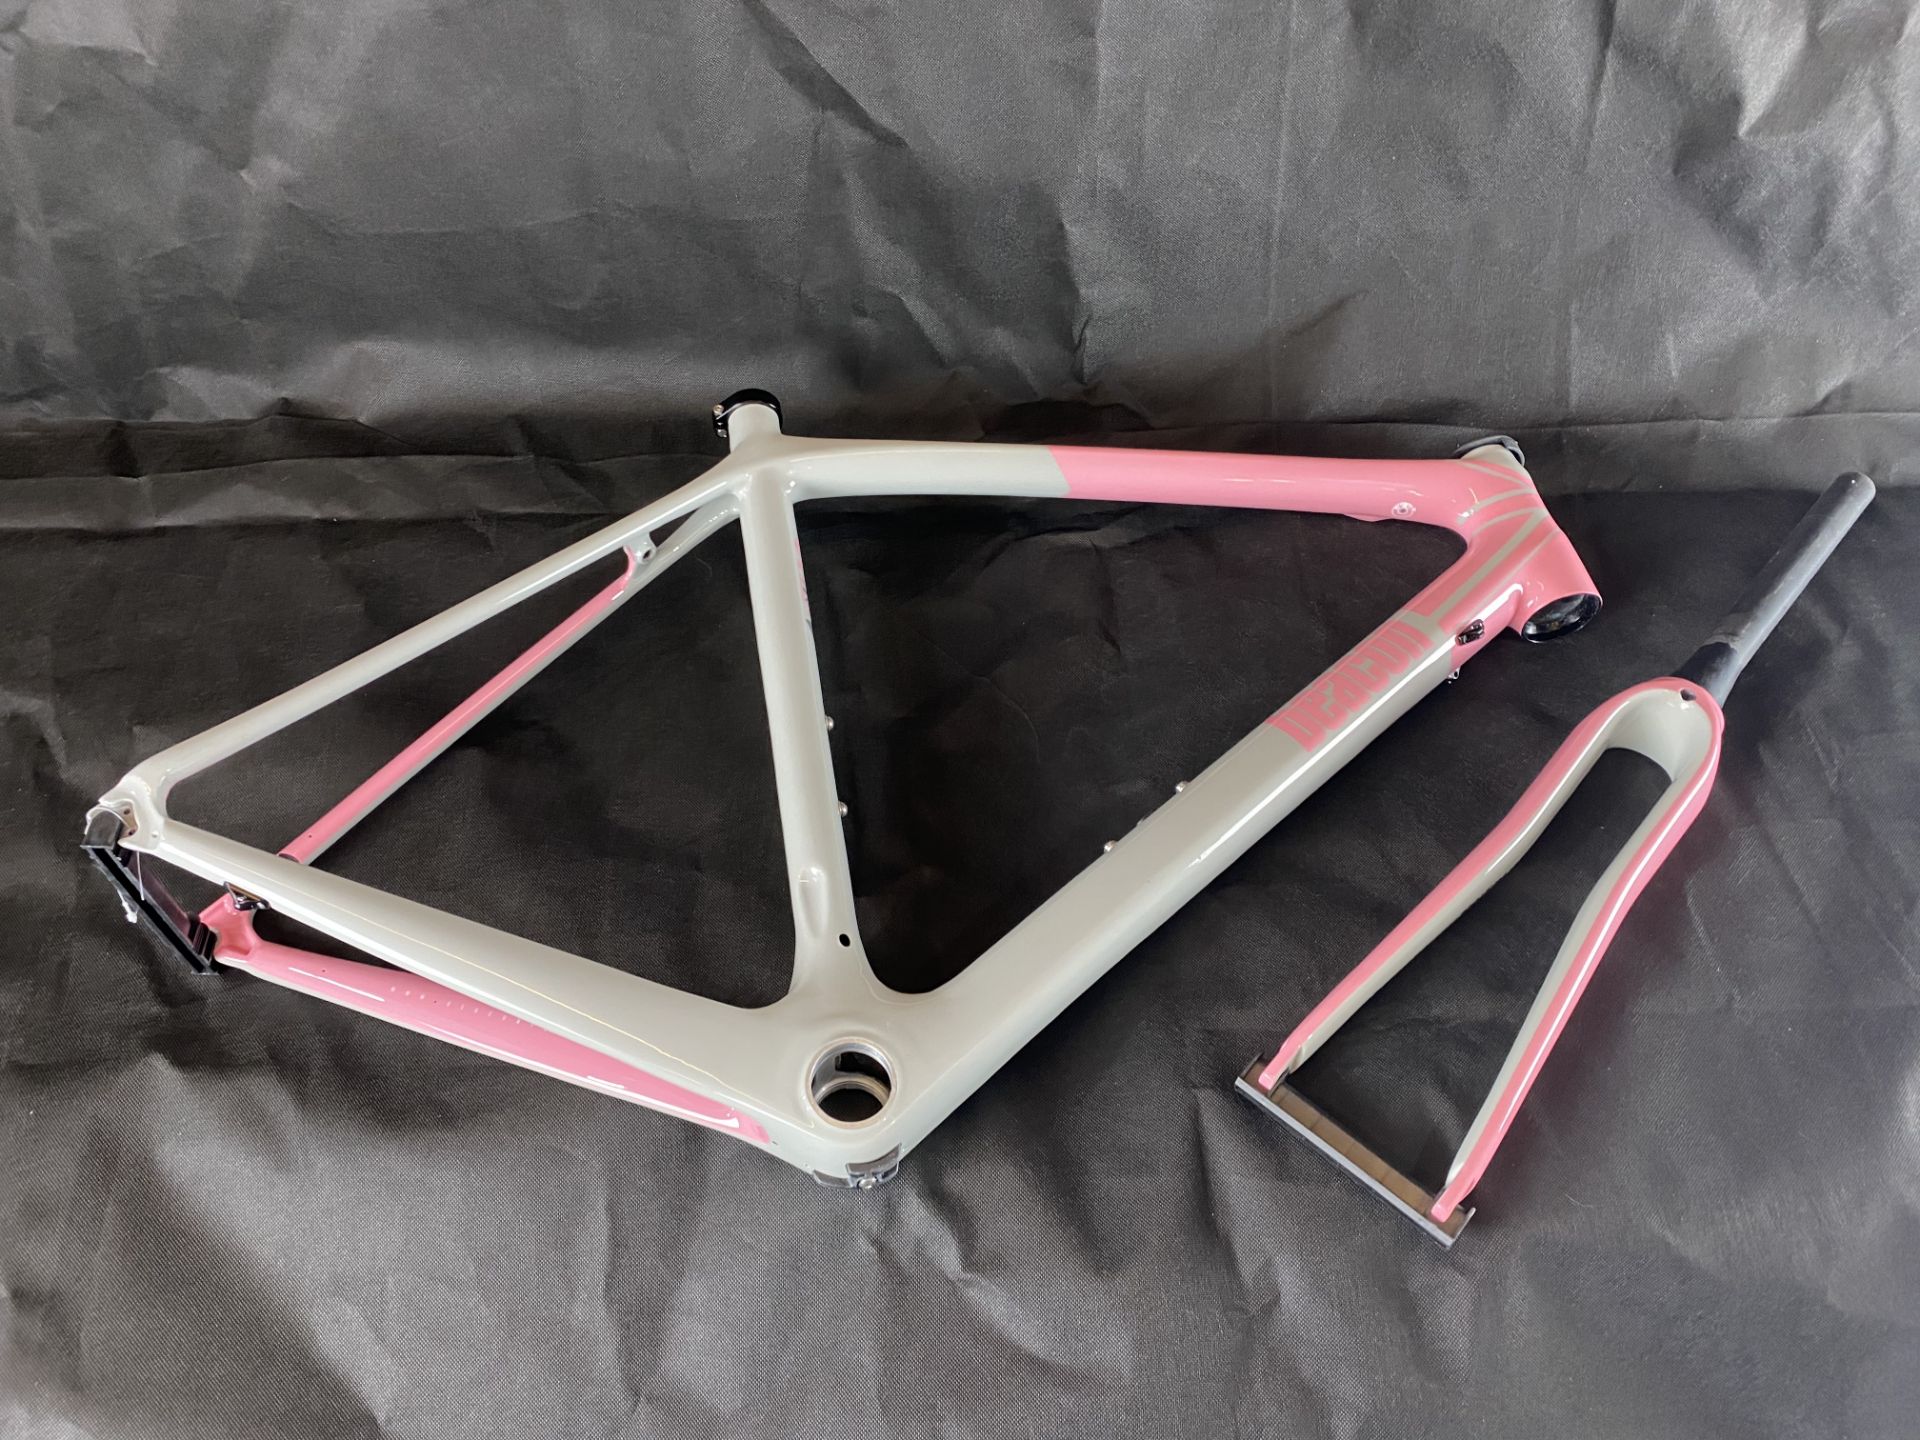 1 x Beacon Model BF-70, Size 540, Carbon Fibre Bike Frame in Grey & Pink.